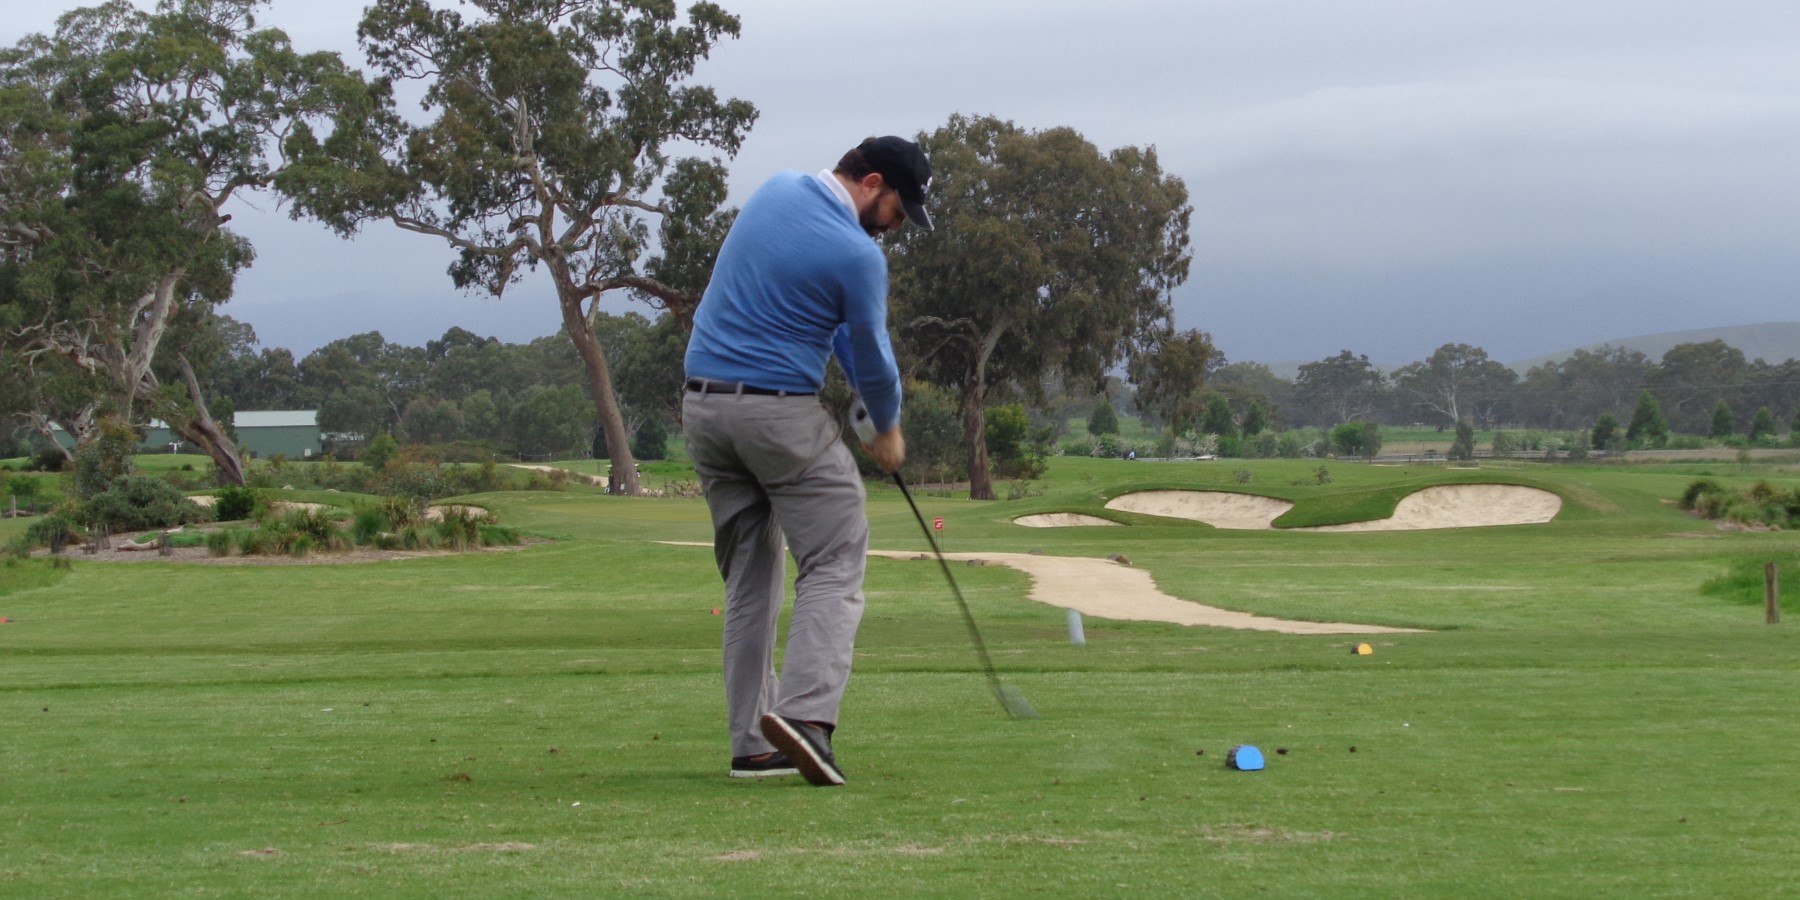 NSW Golf Clubs and SGA - Social Golf Australia